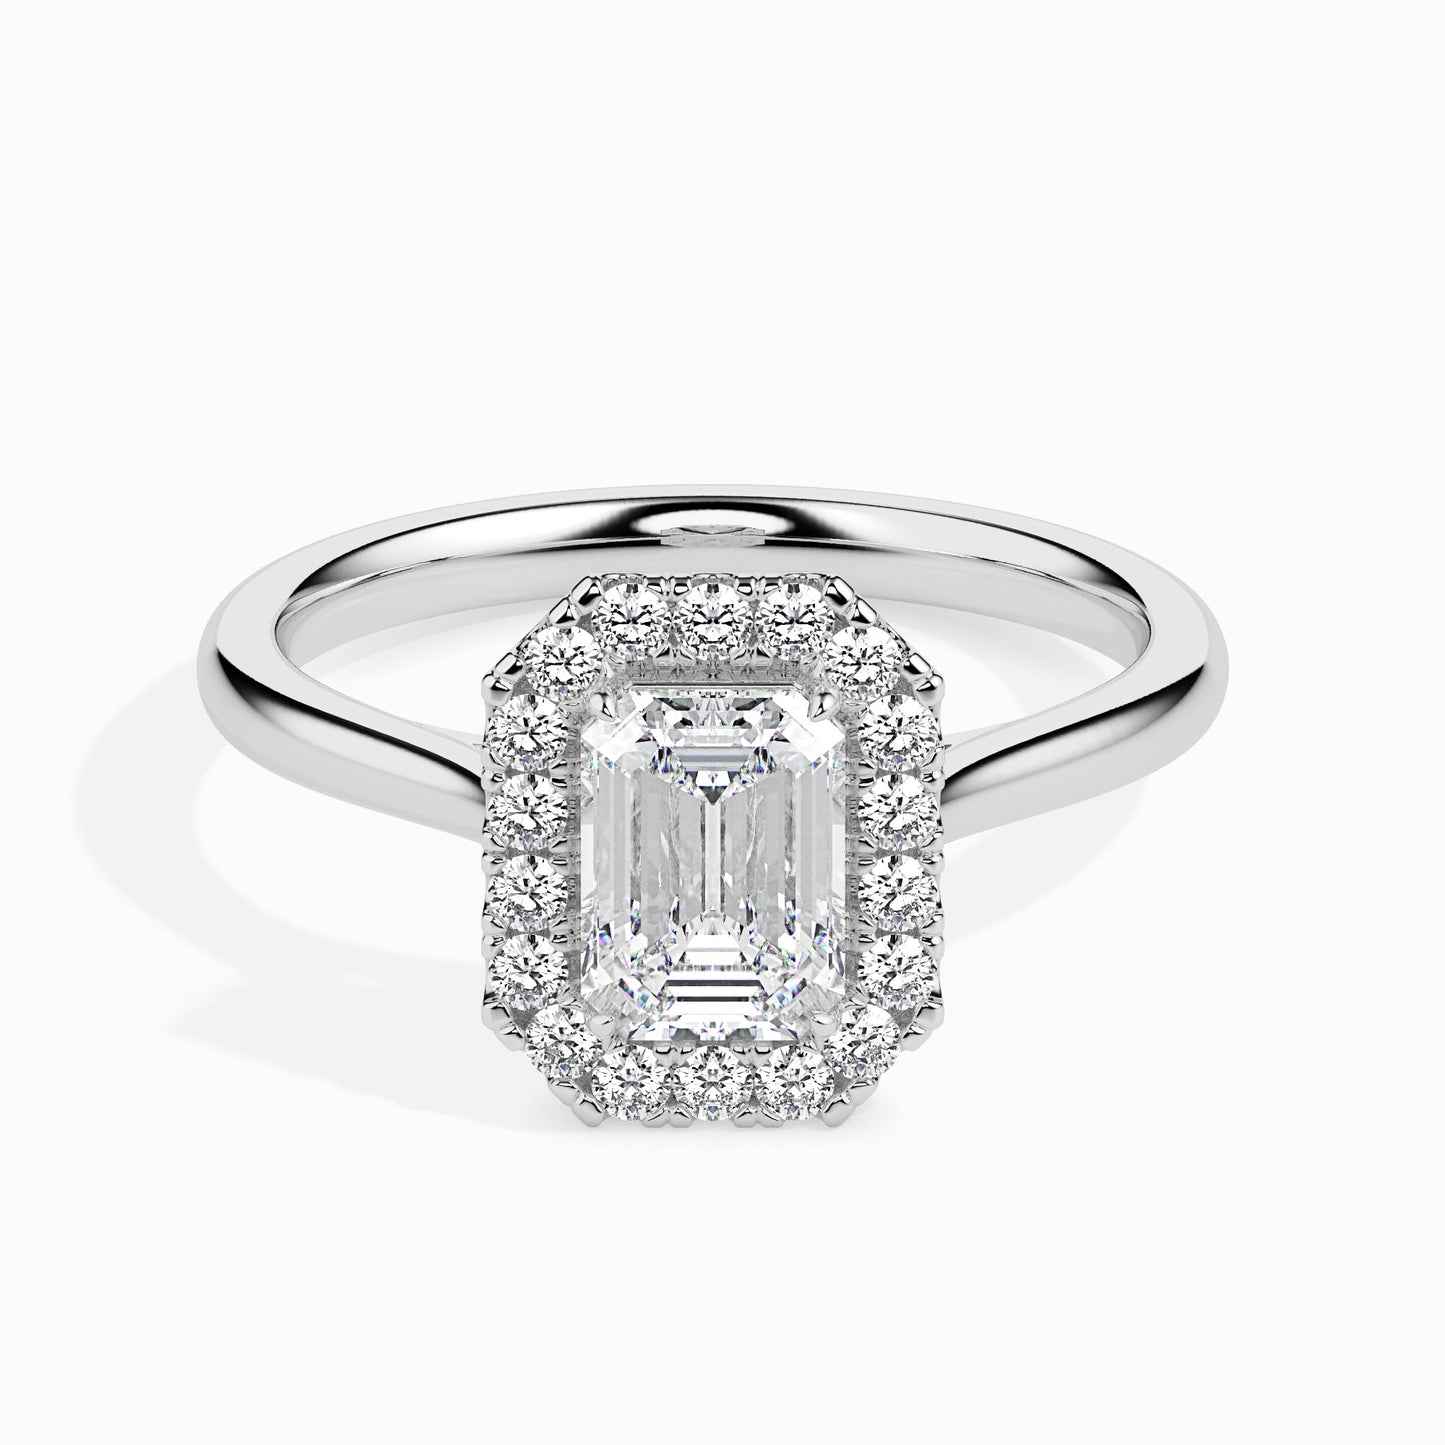 4.00CT Oval Cut Simulated Diamond Wedding Engagement Ring 14K White Gold  Finish | eBay